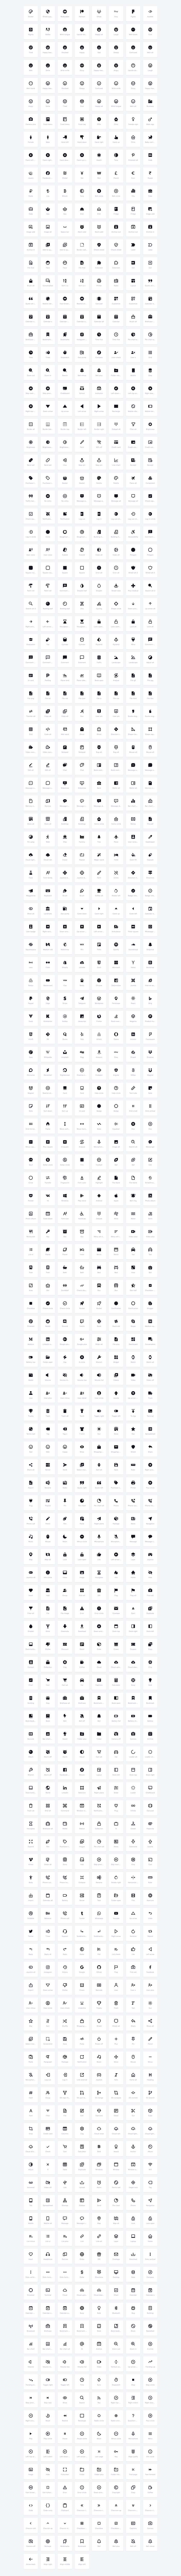 Boxicons - High Quality Web Icons Set